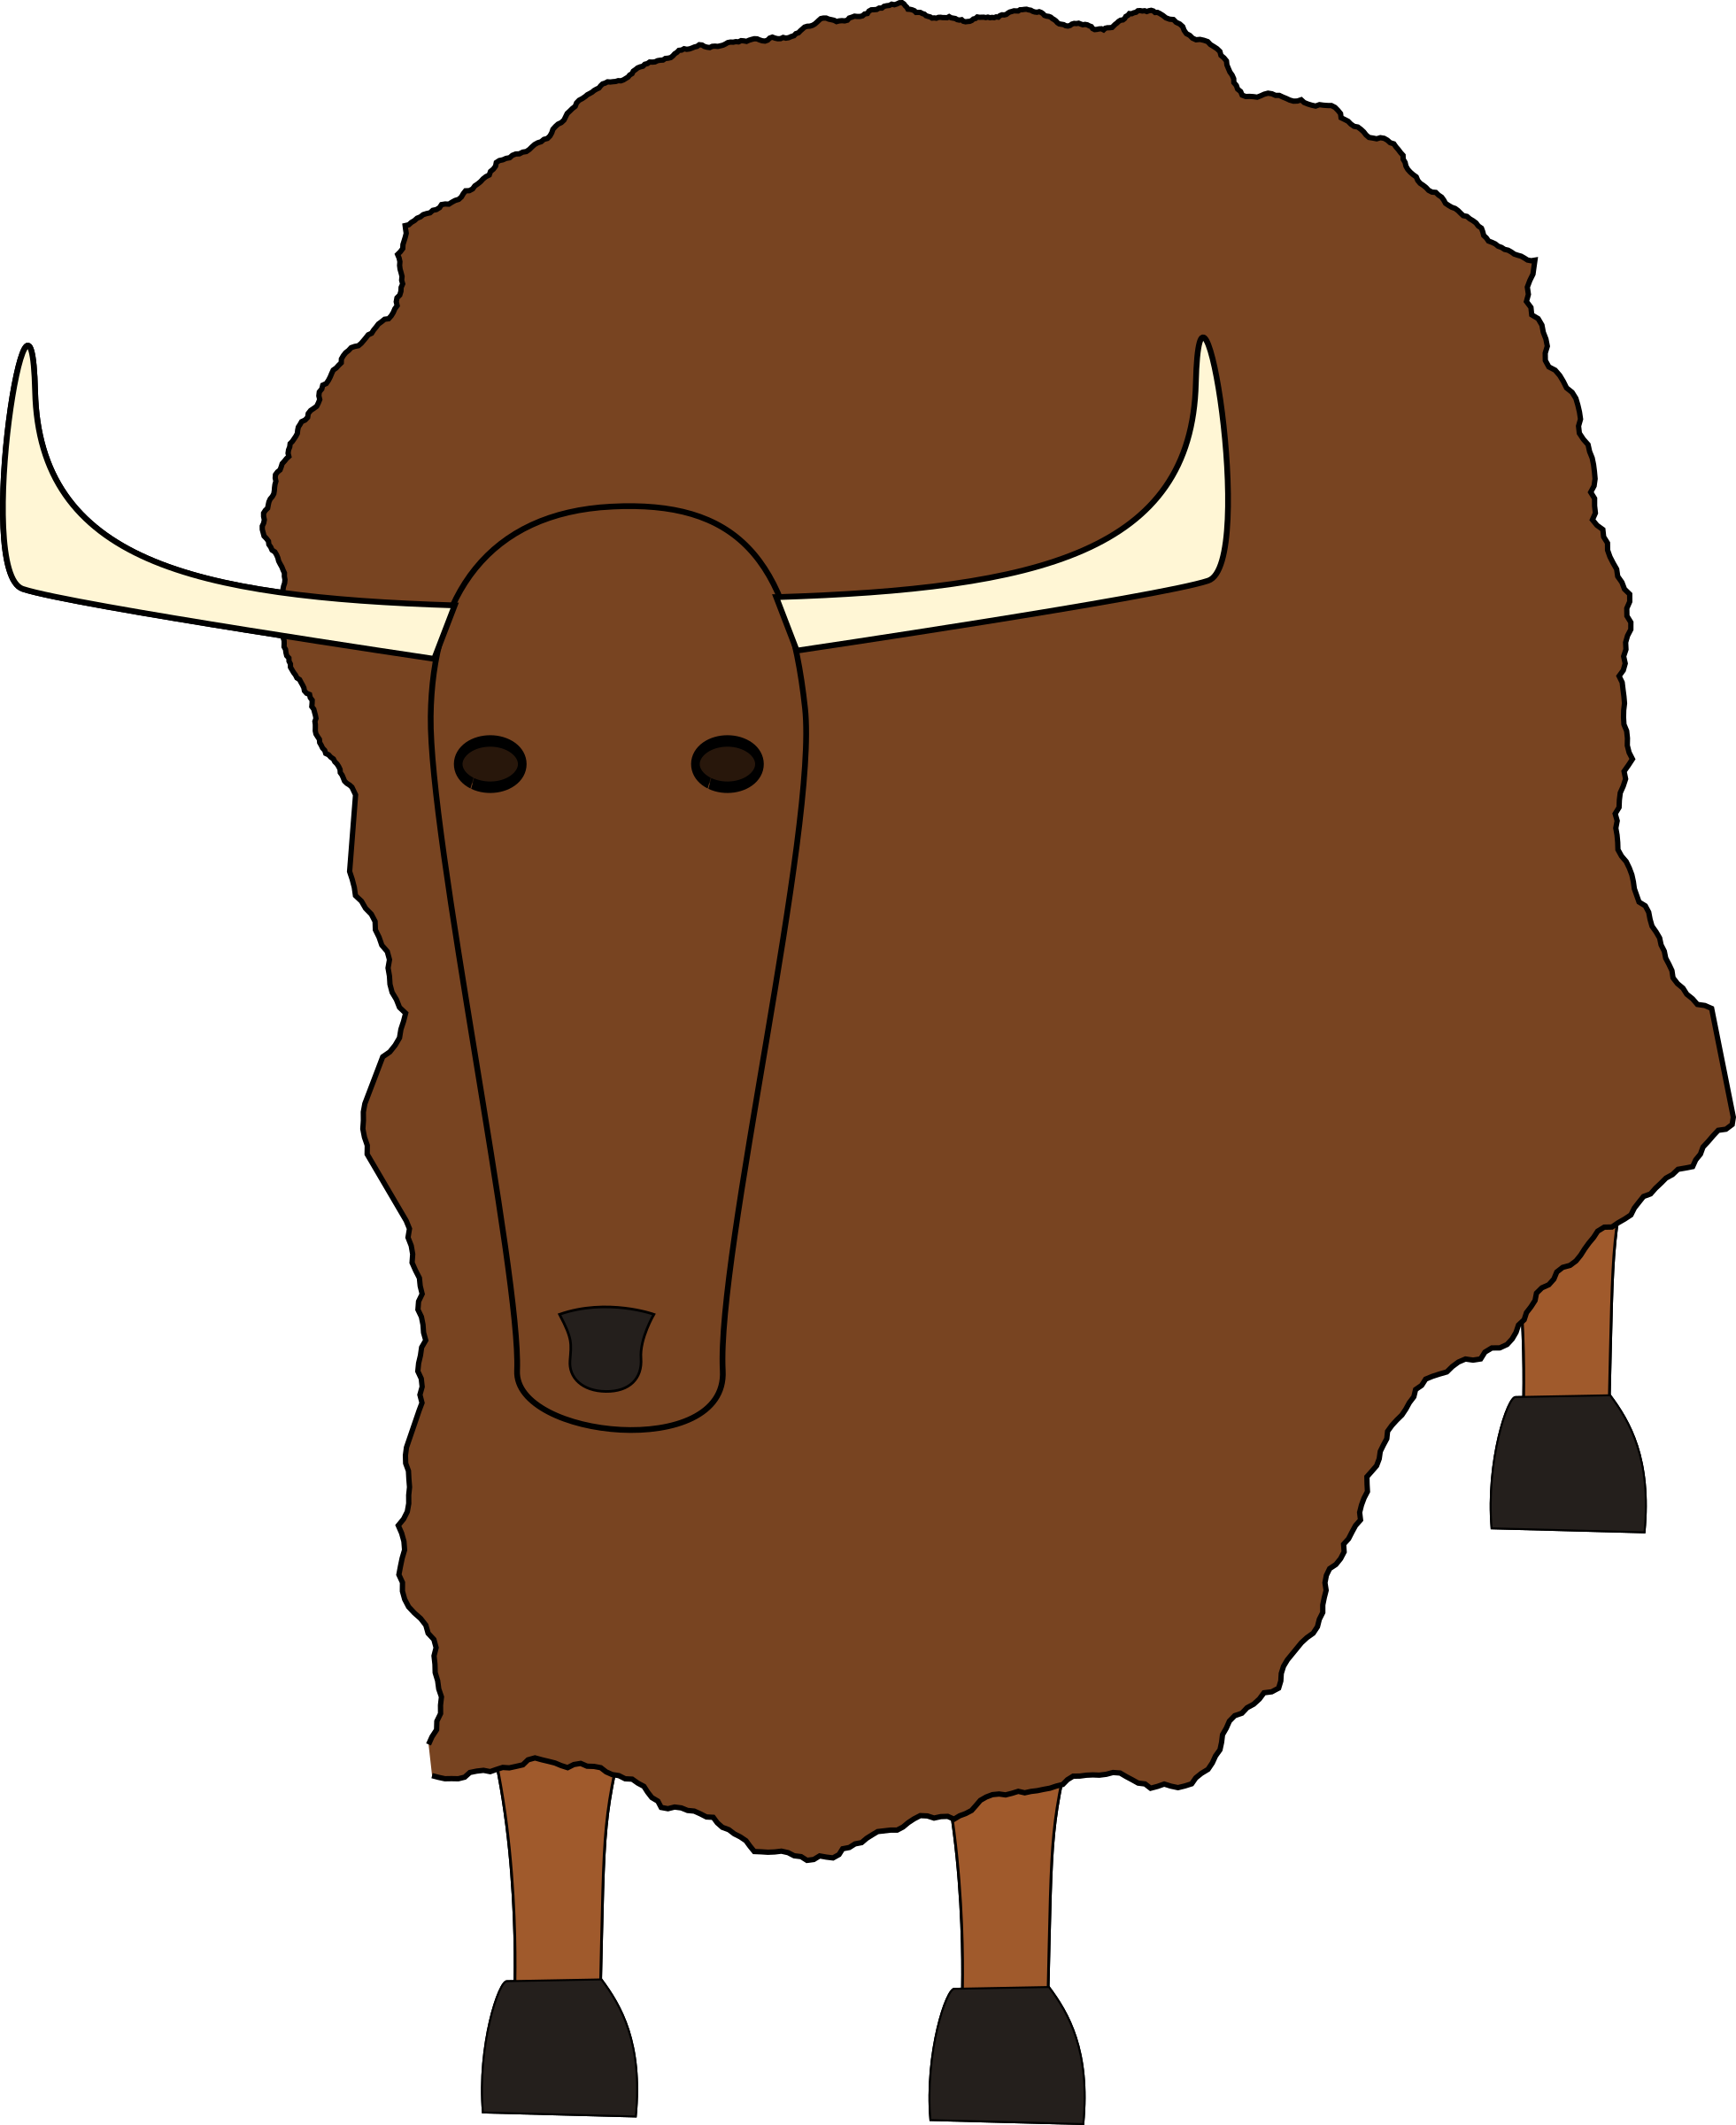 A Cartoon Of A Brown Animal